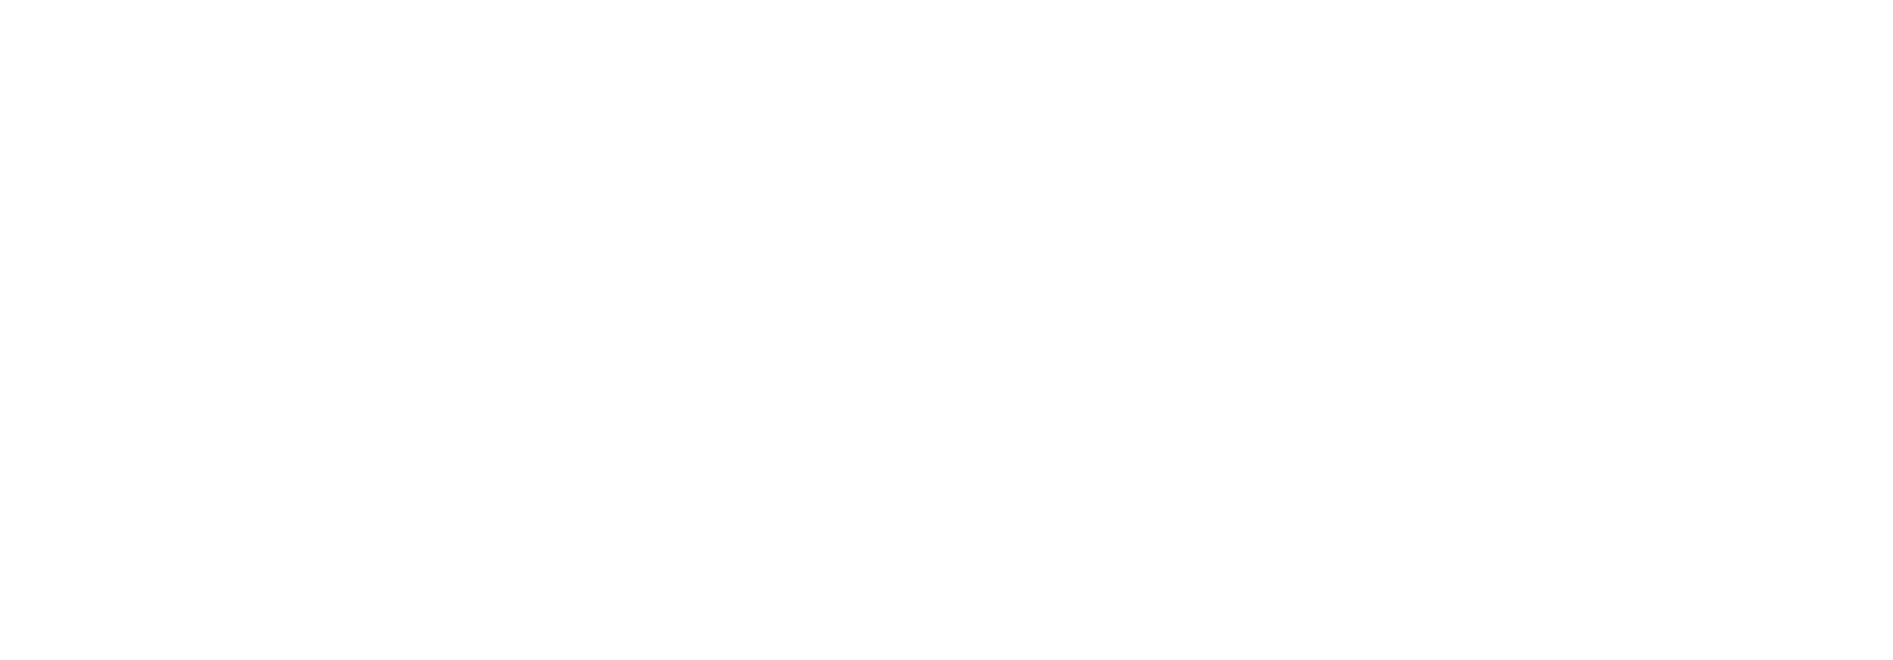 https://www.phidias-hpc.eu/sites/default/files/revslider/image/Phidias_logo_USO__final_White_0.png